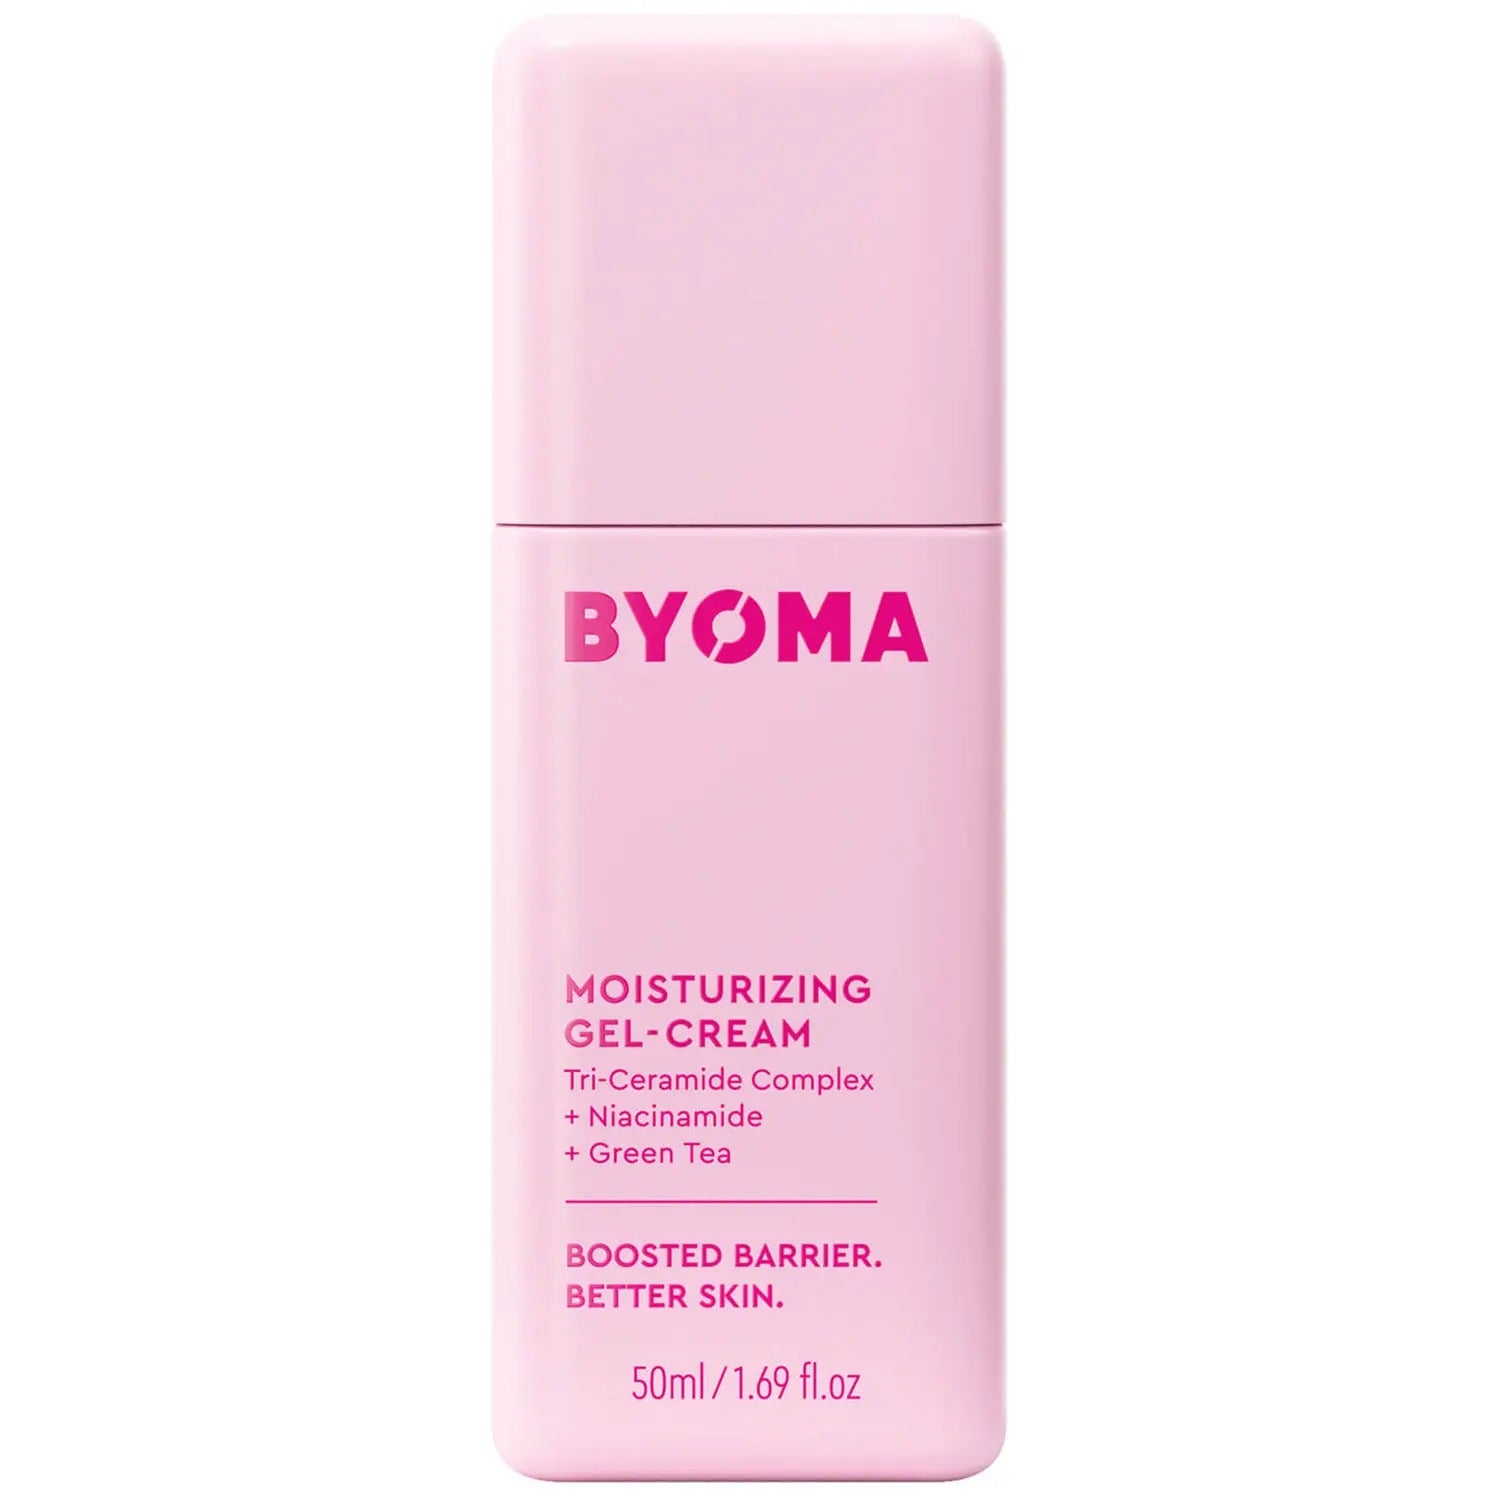 Byoma Moisturizing Gel Cream